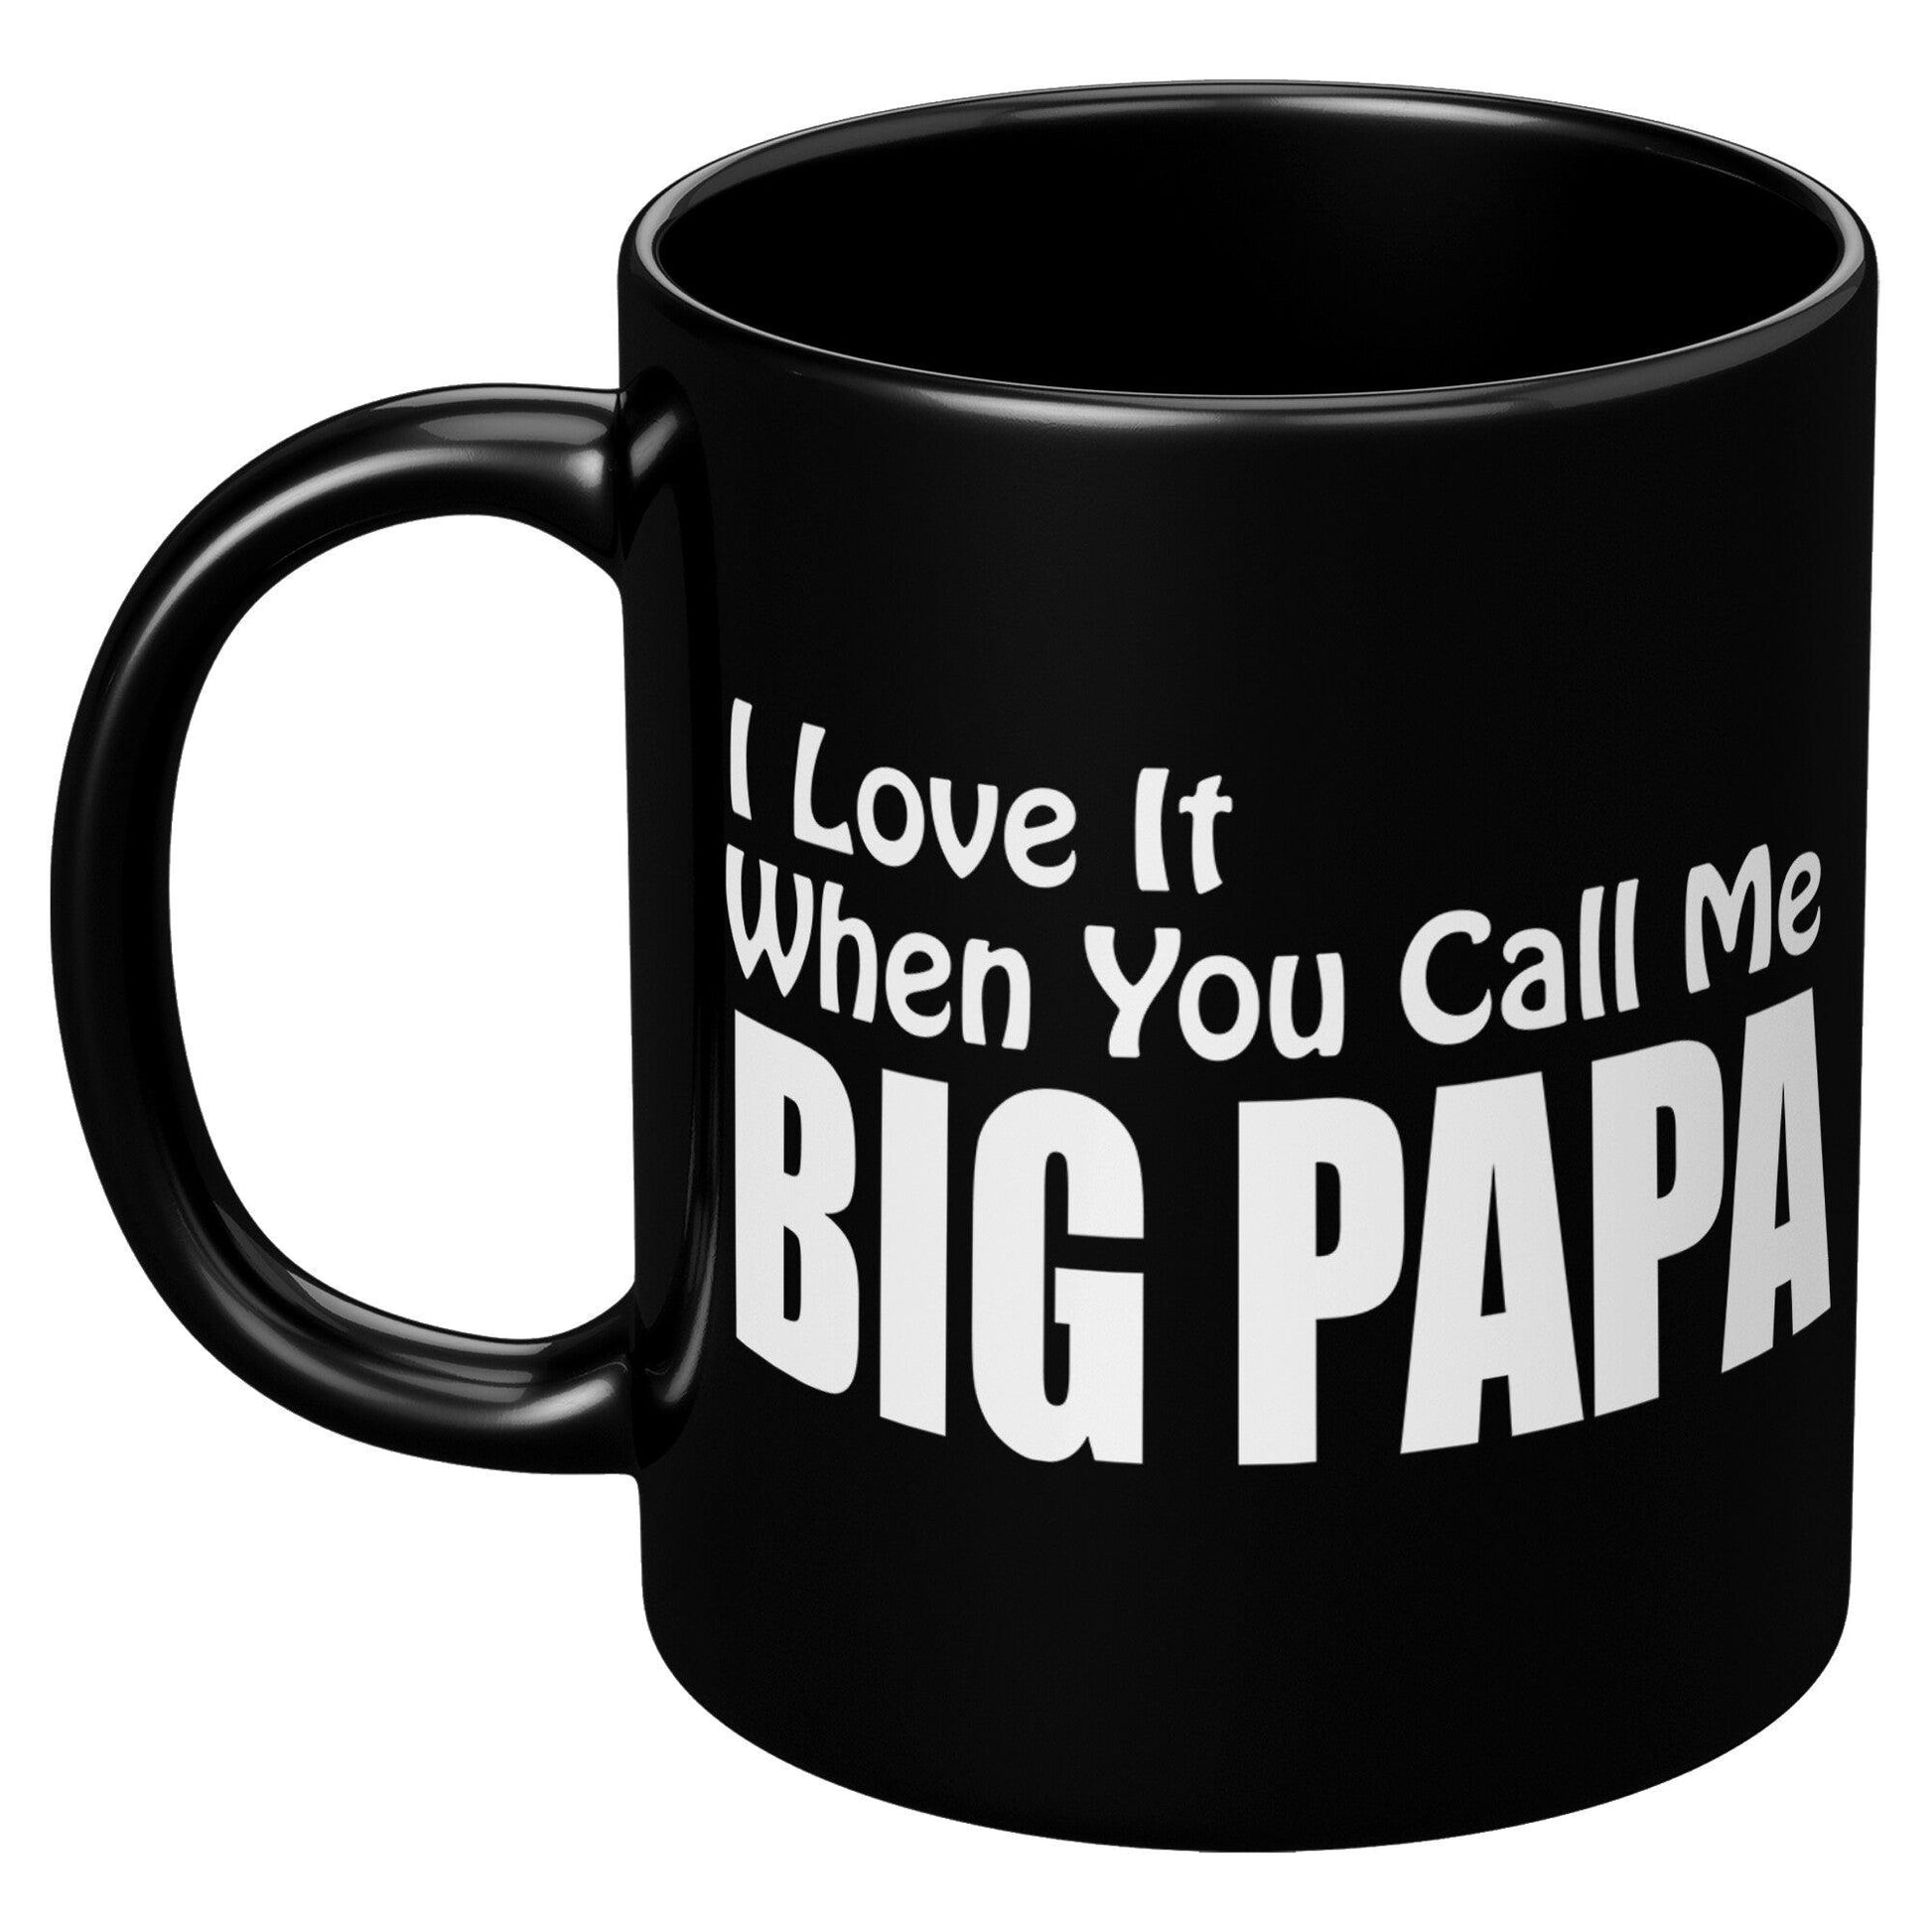 I love It When You Call Me -BIG PAPA Black Mug - TheGivenGet